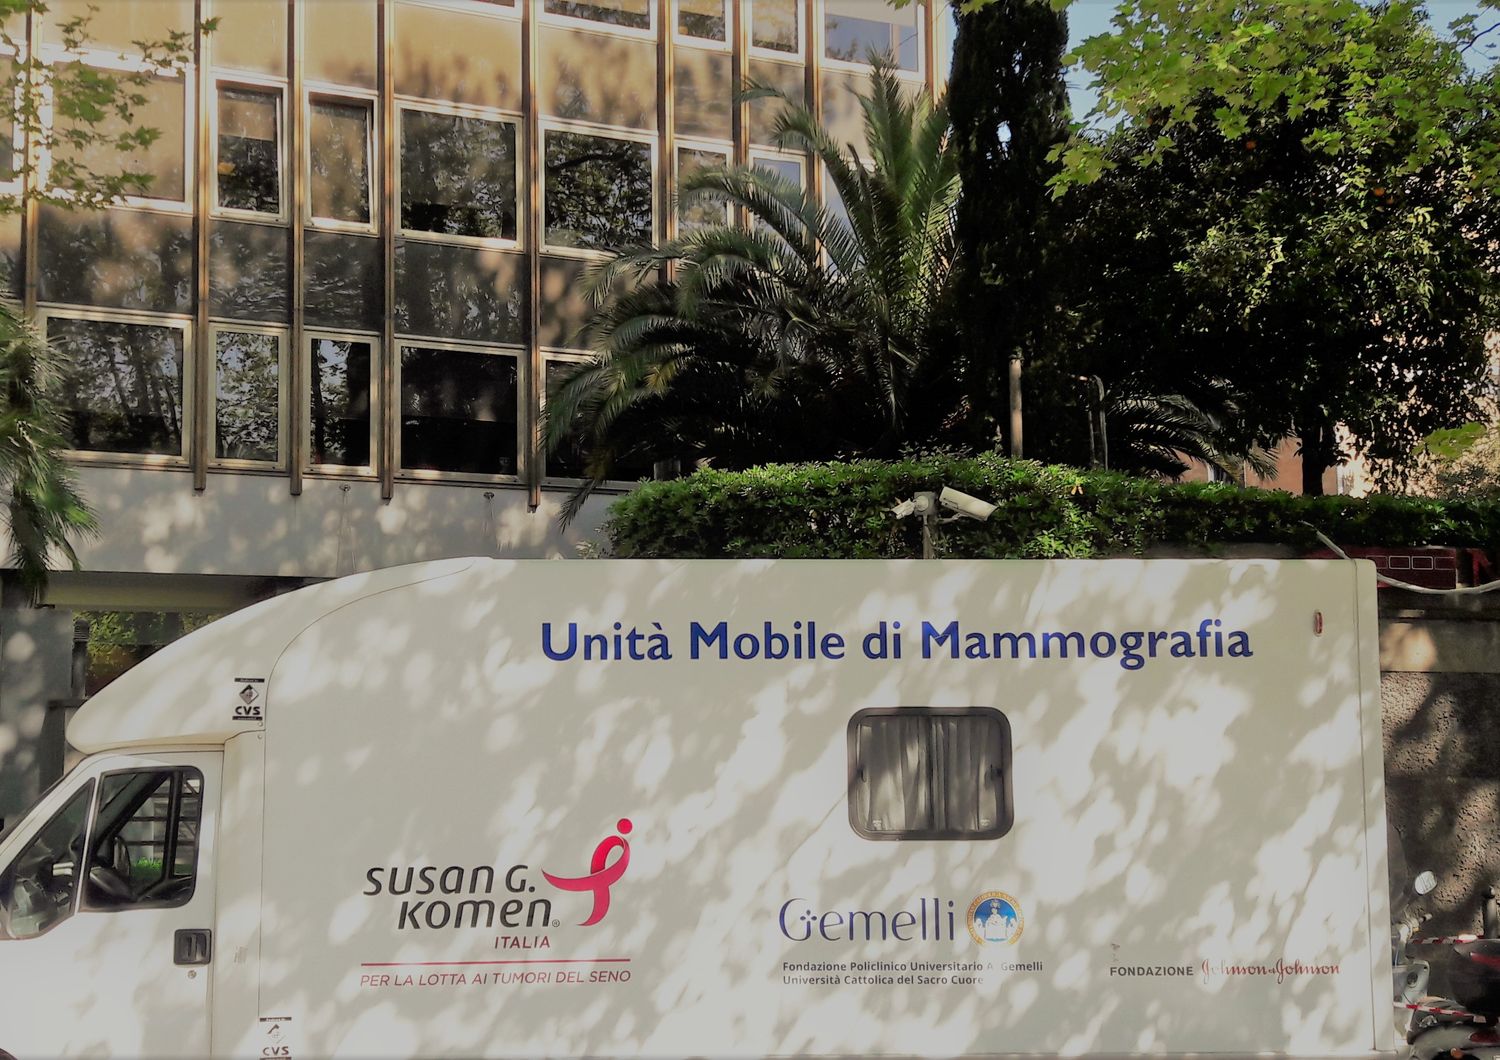 &nbsp;Unit&agrave; mobile mammografia